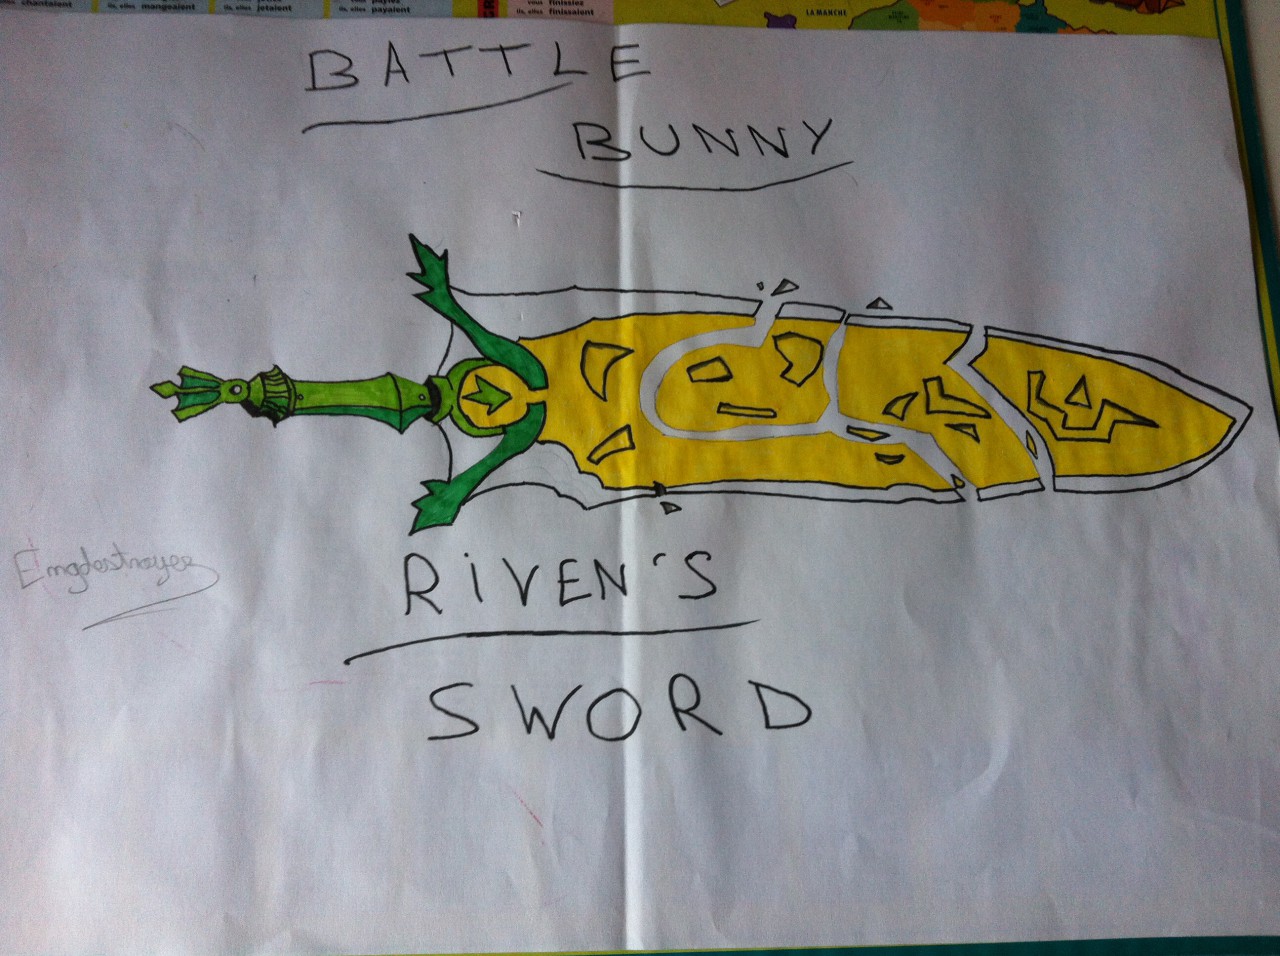 Dragon blade (Riven) by DrKhorn on DeviantArt